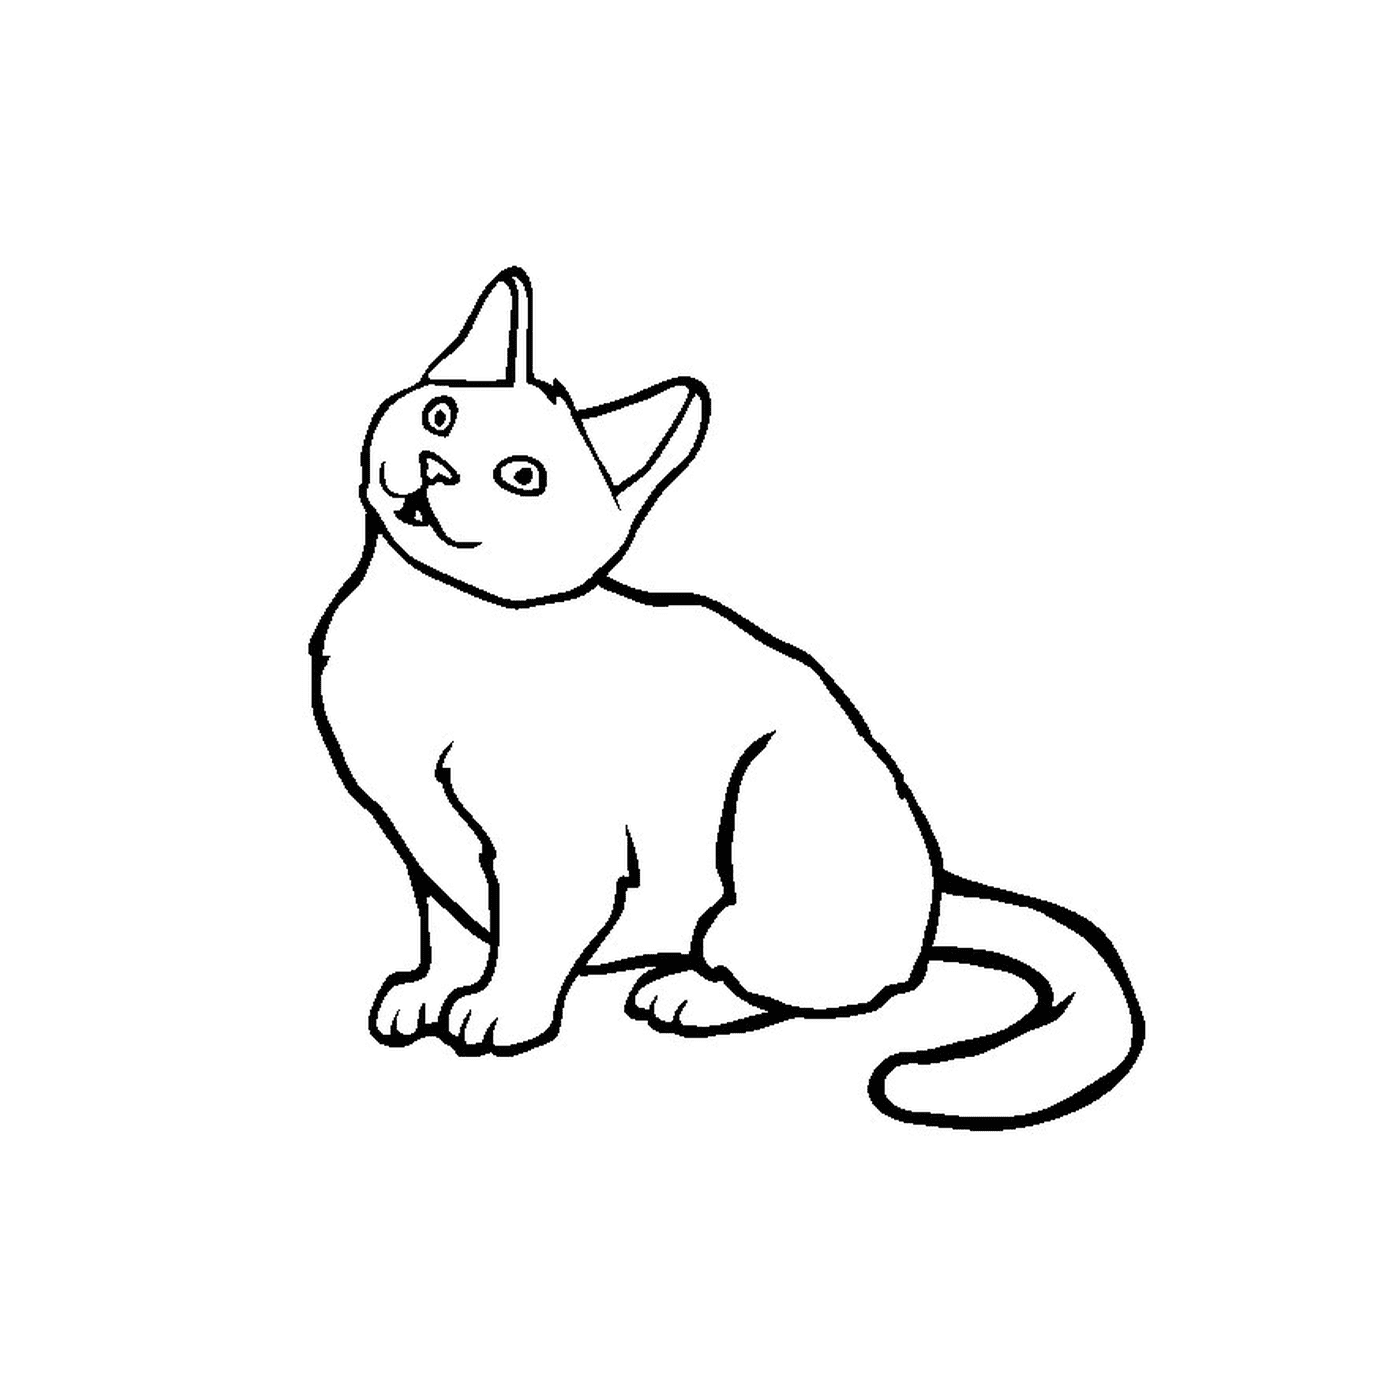  A Chartreux breed kitten 